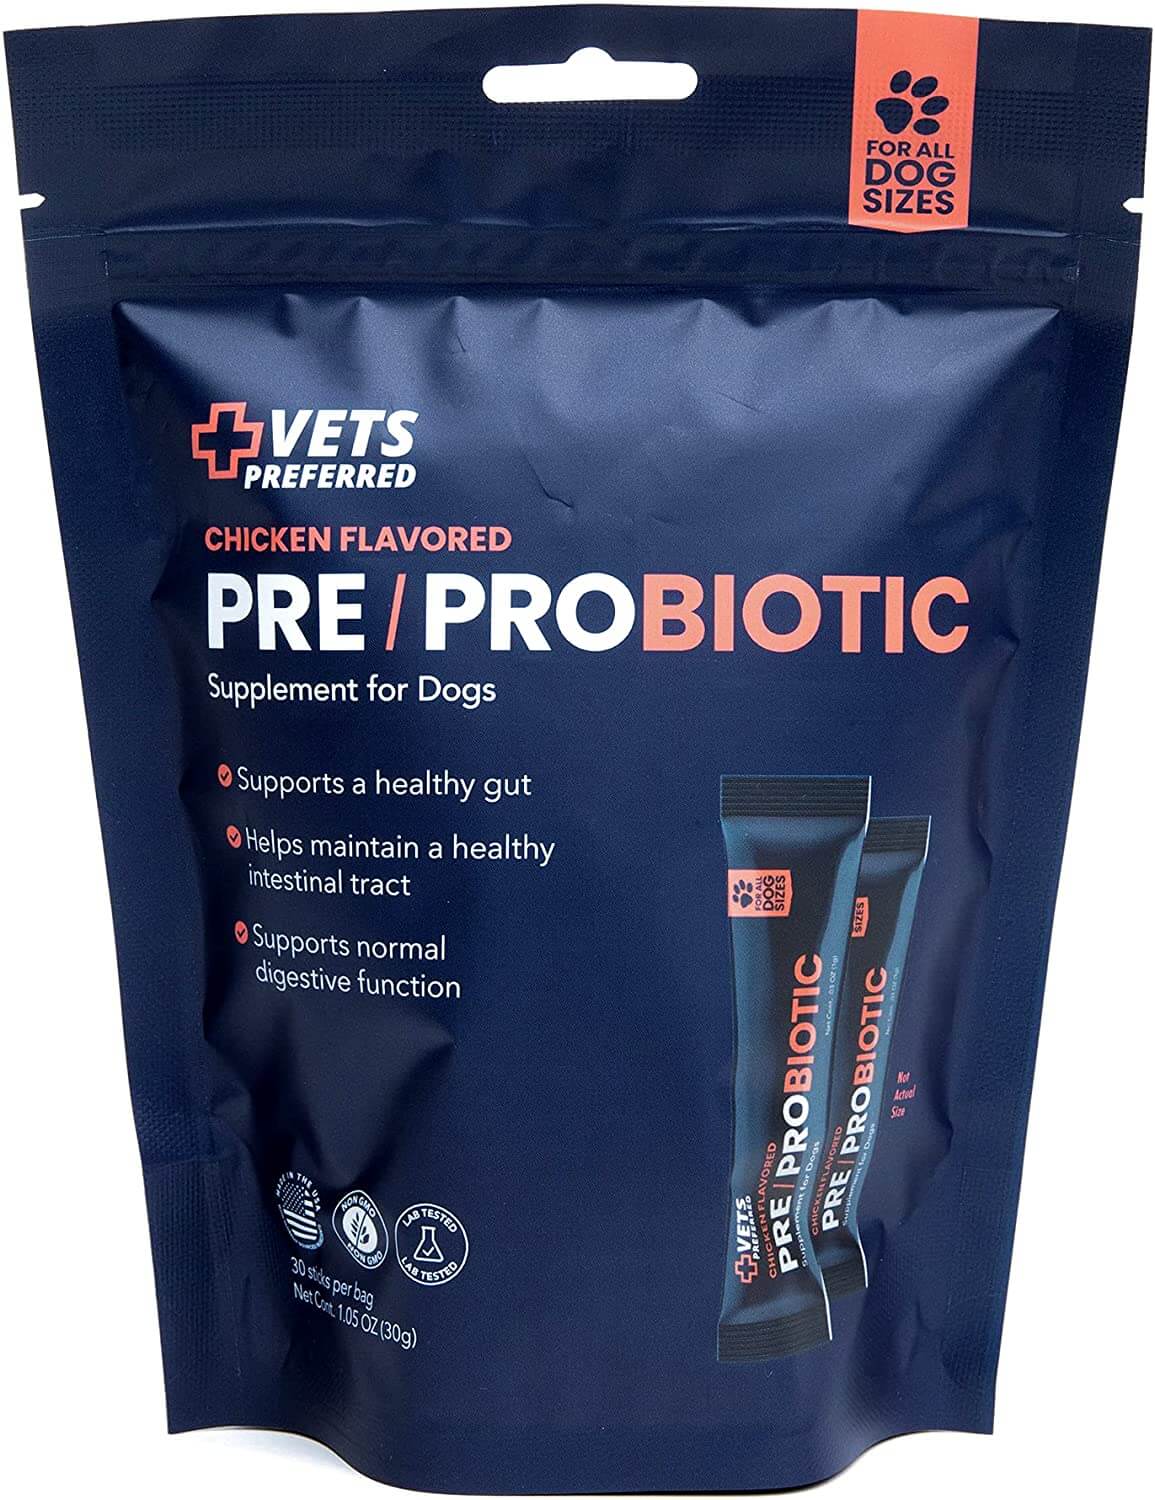 Vets Preferred Probiotics supplement